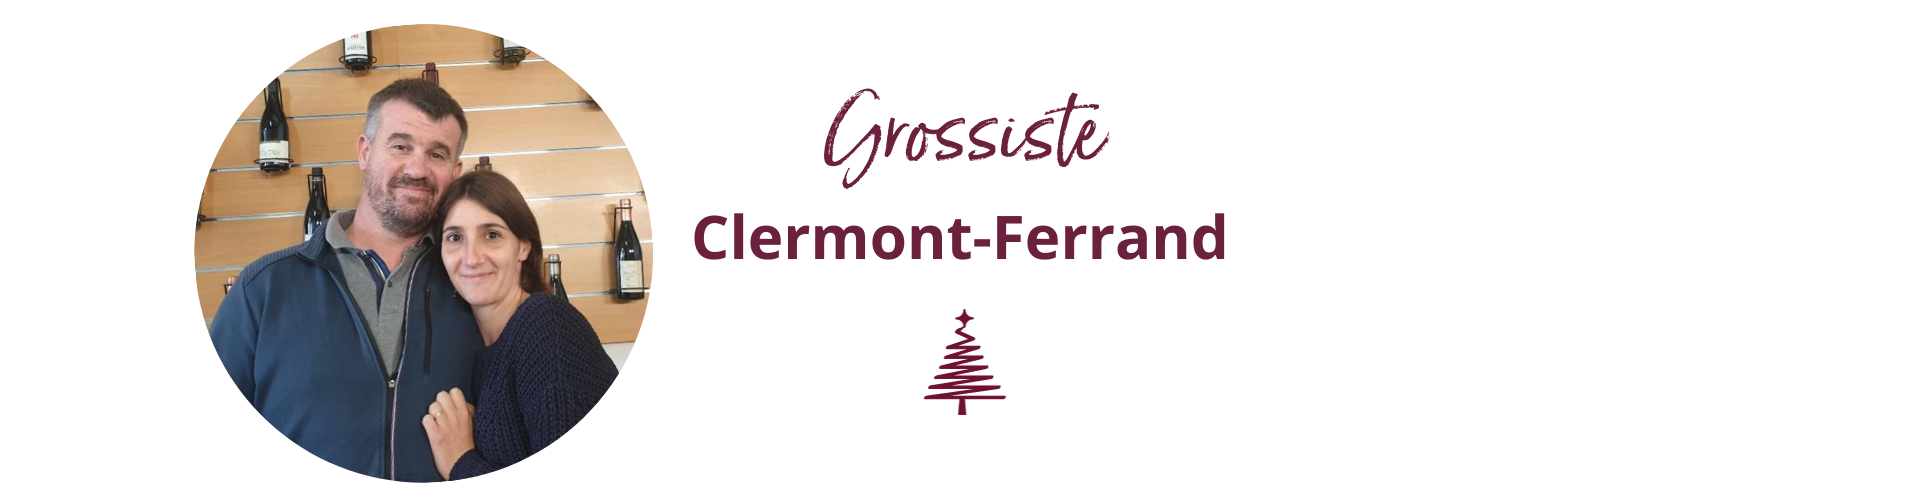 Grossiste Marcon Clermont-Ferrand 